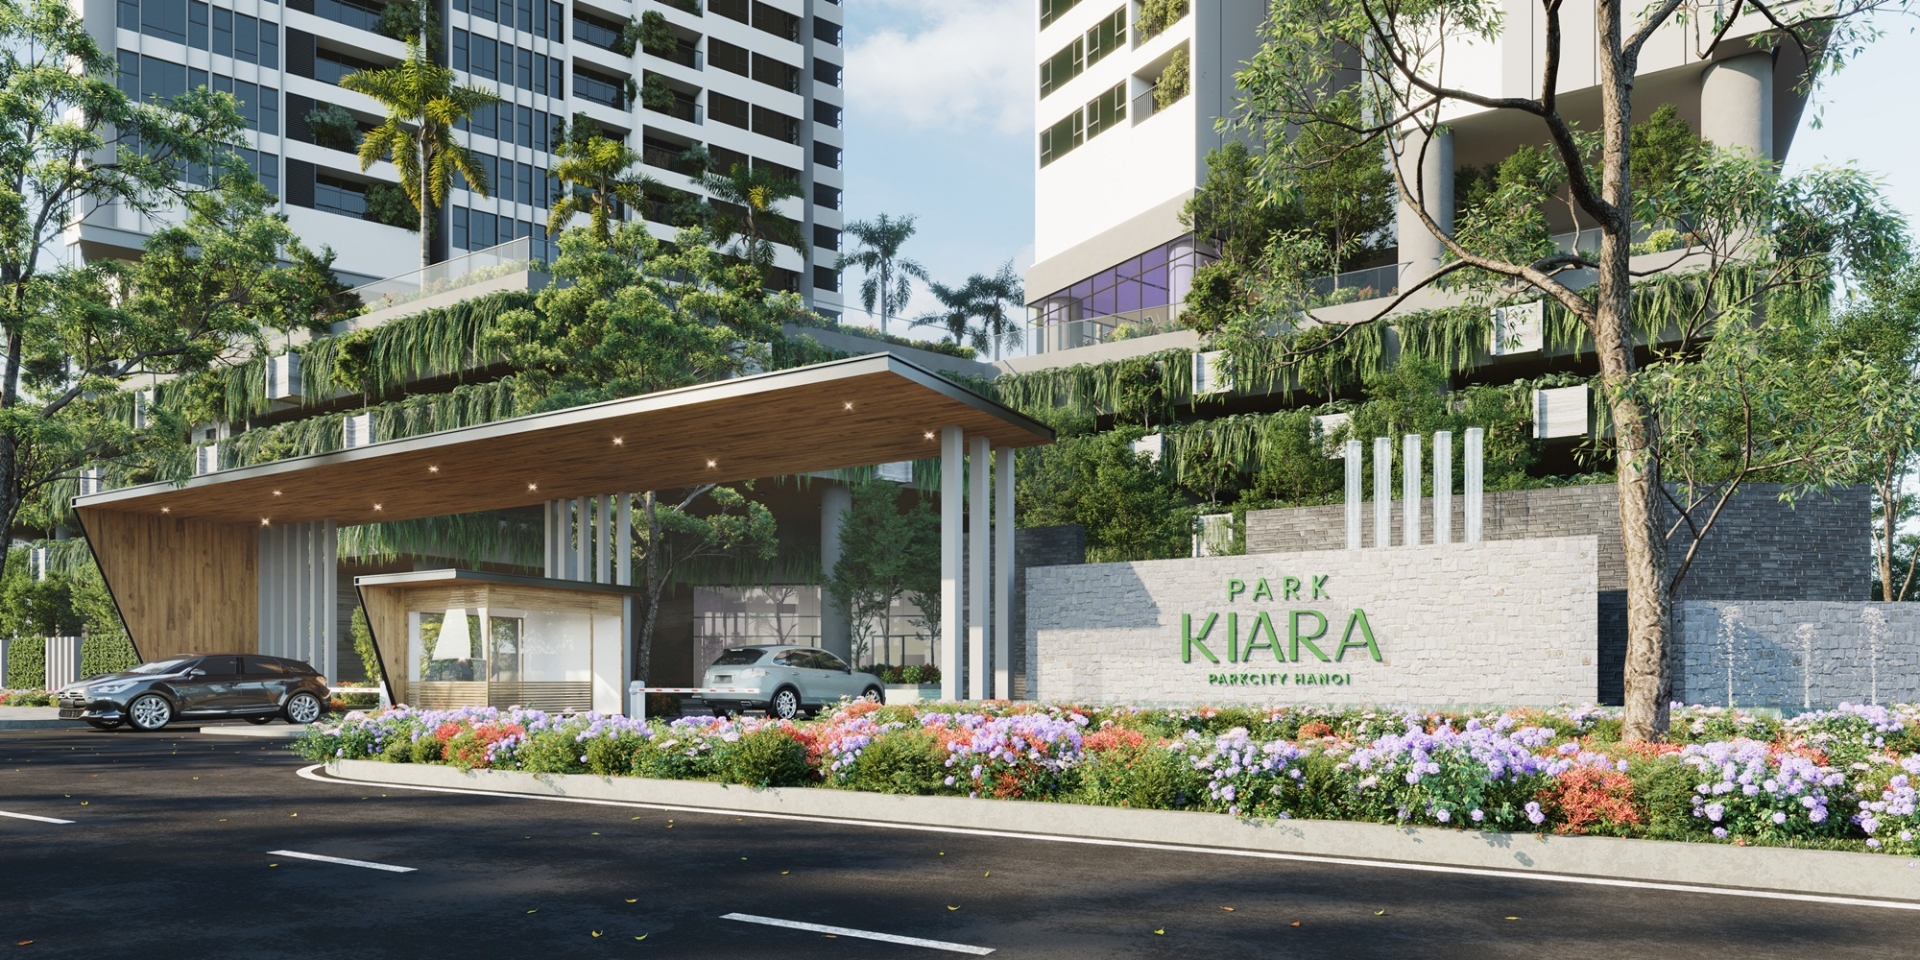 Park Kiara model apartment launched in ParkCity Hanoi